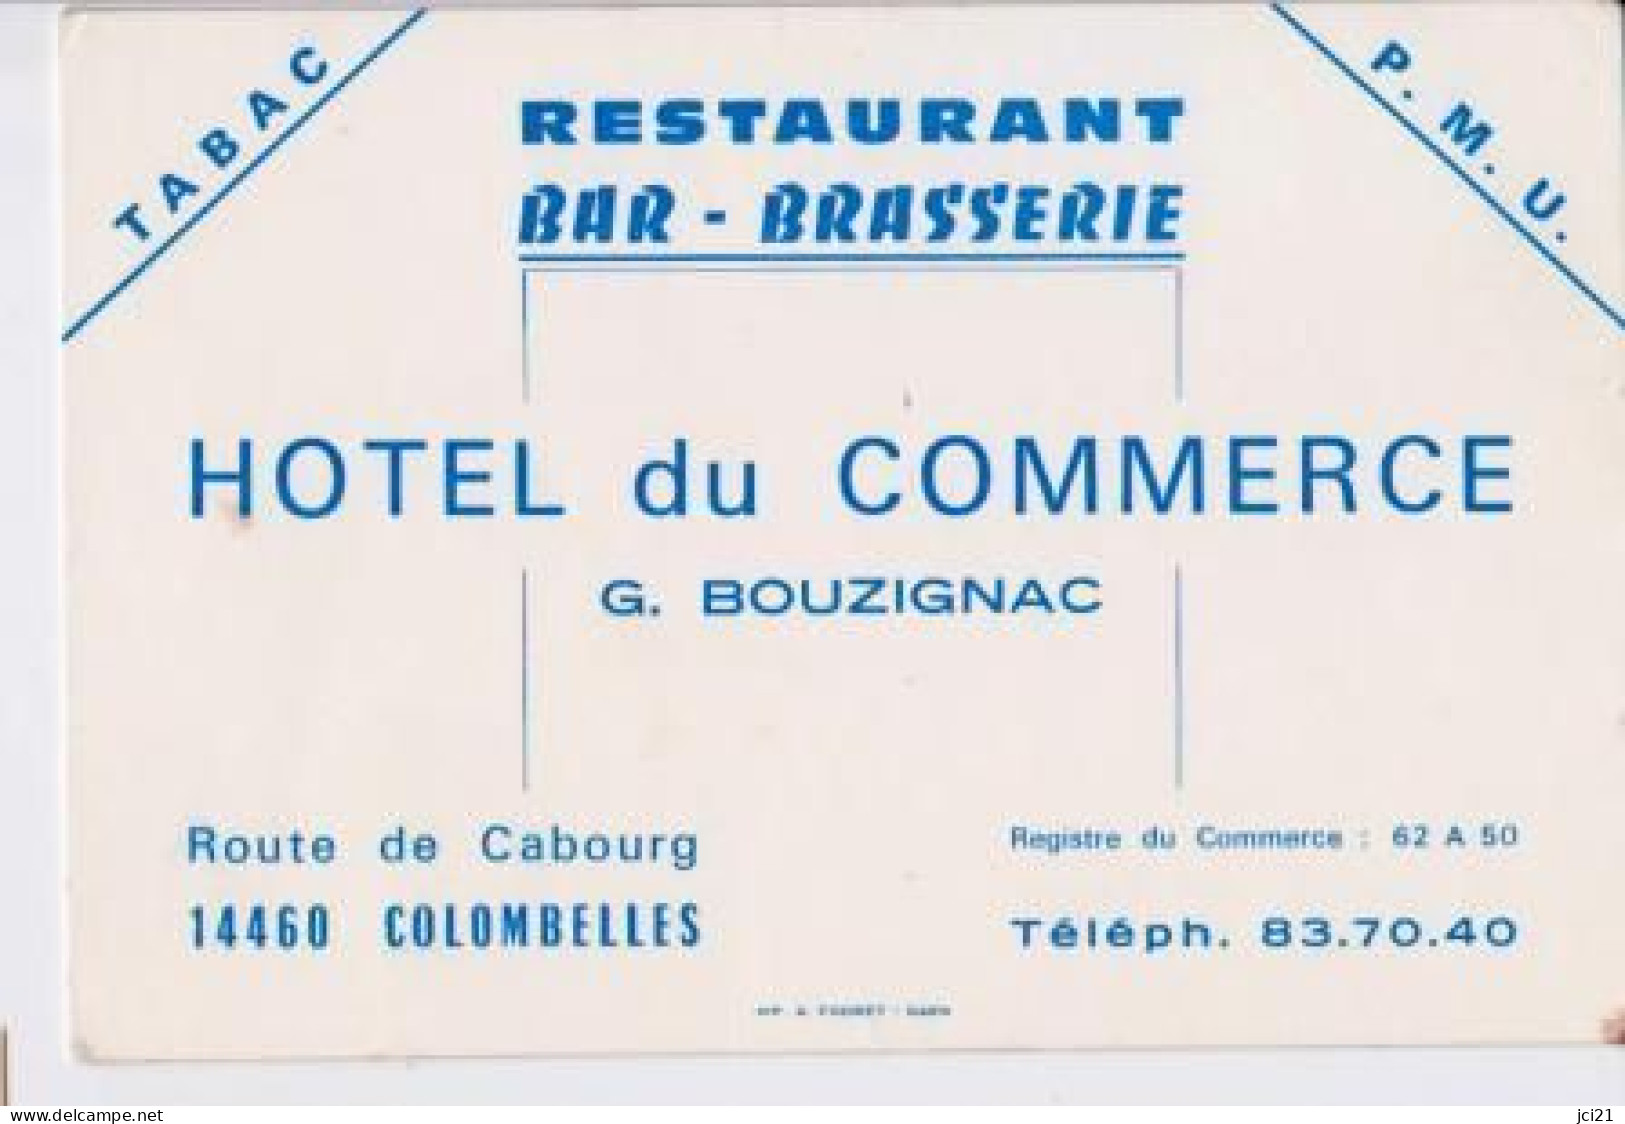 Restaurant Bar Brasserie Hôtel Du Commerce G.BOUZIGNAC 14460 COLOMBELLES _CV99 - Visitekaartjes